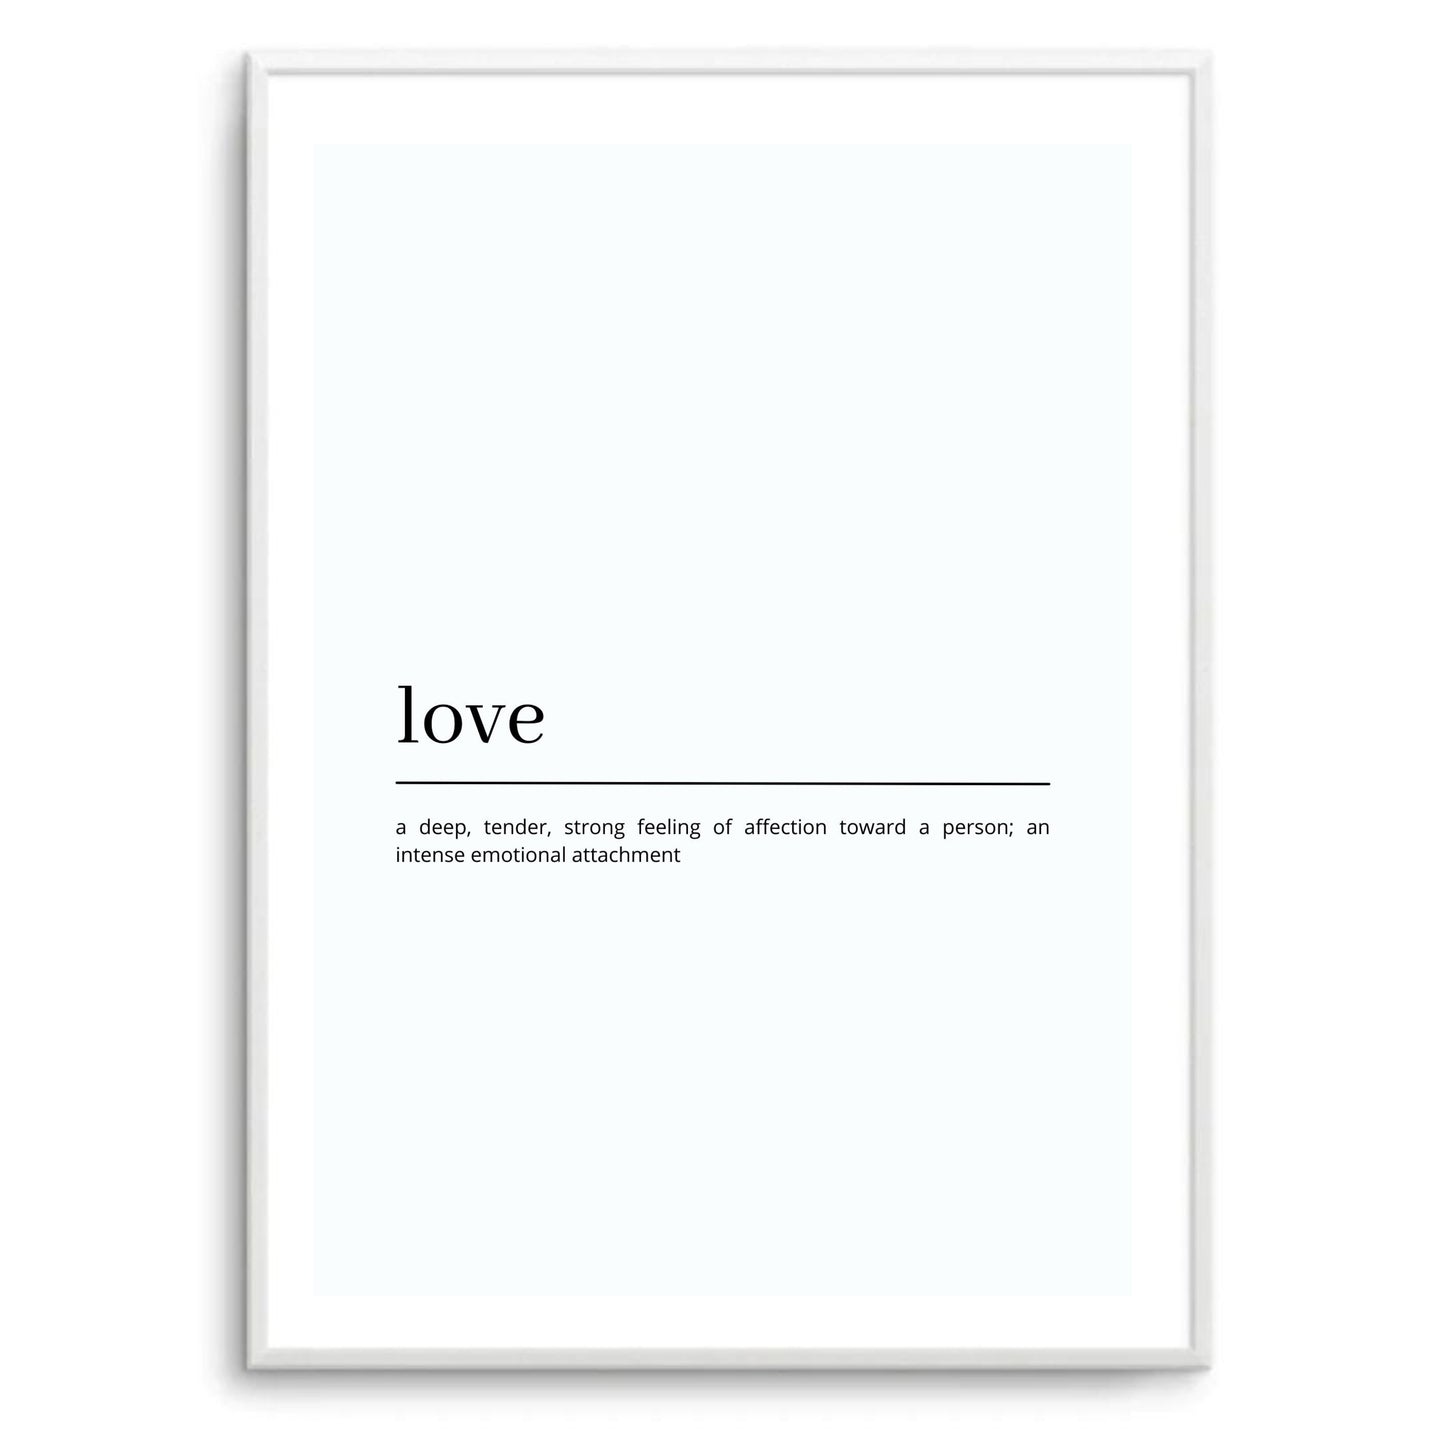 Love Definition (White)